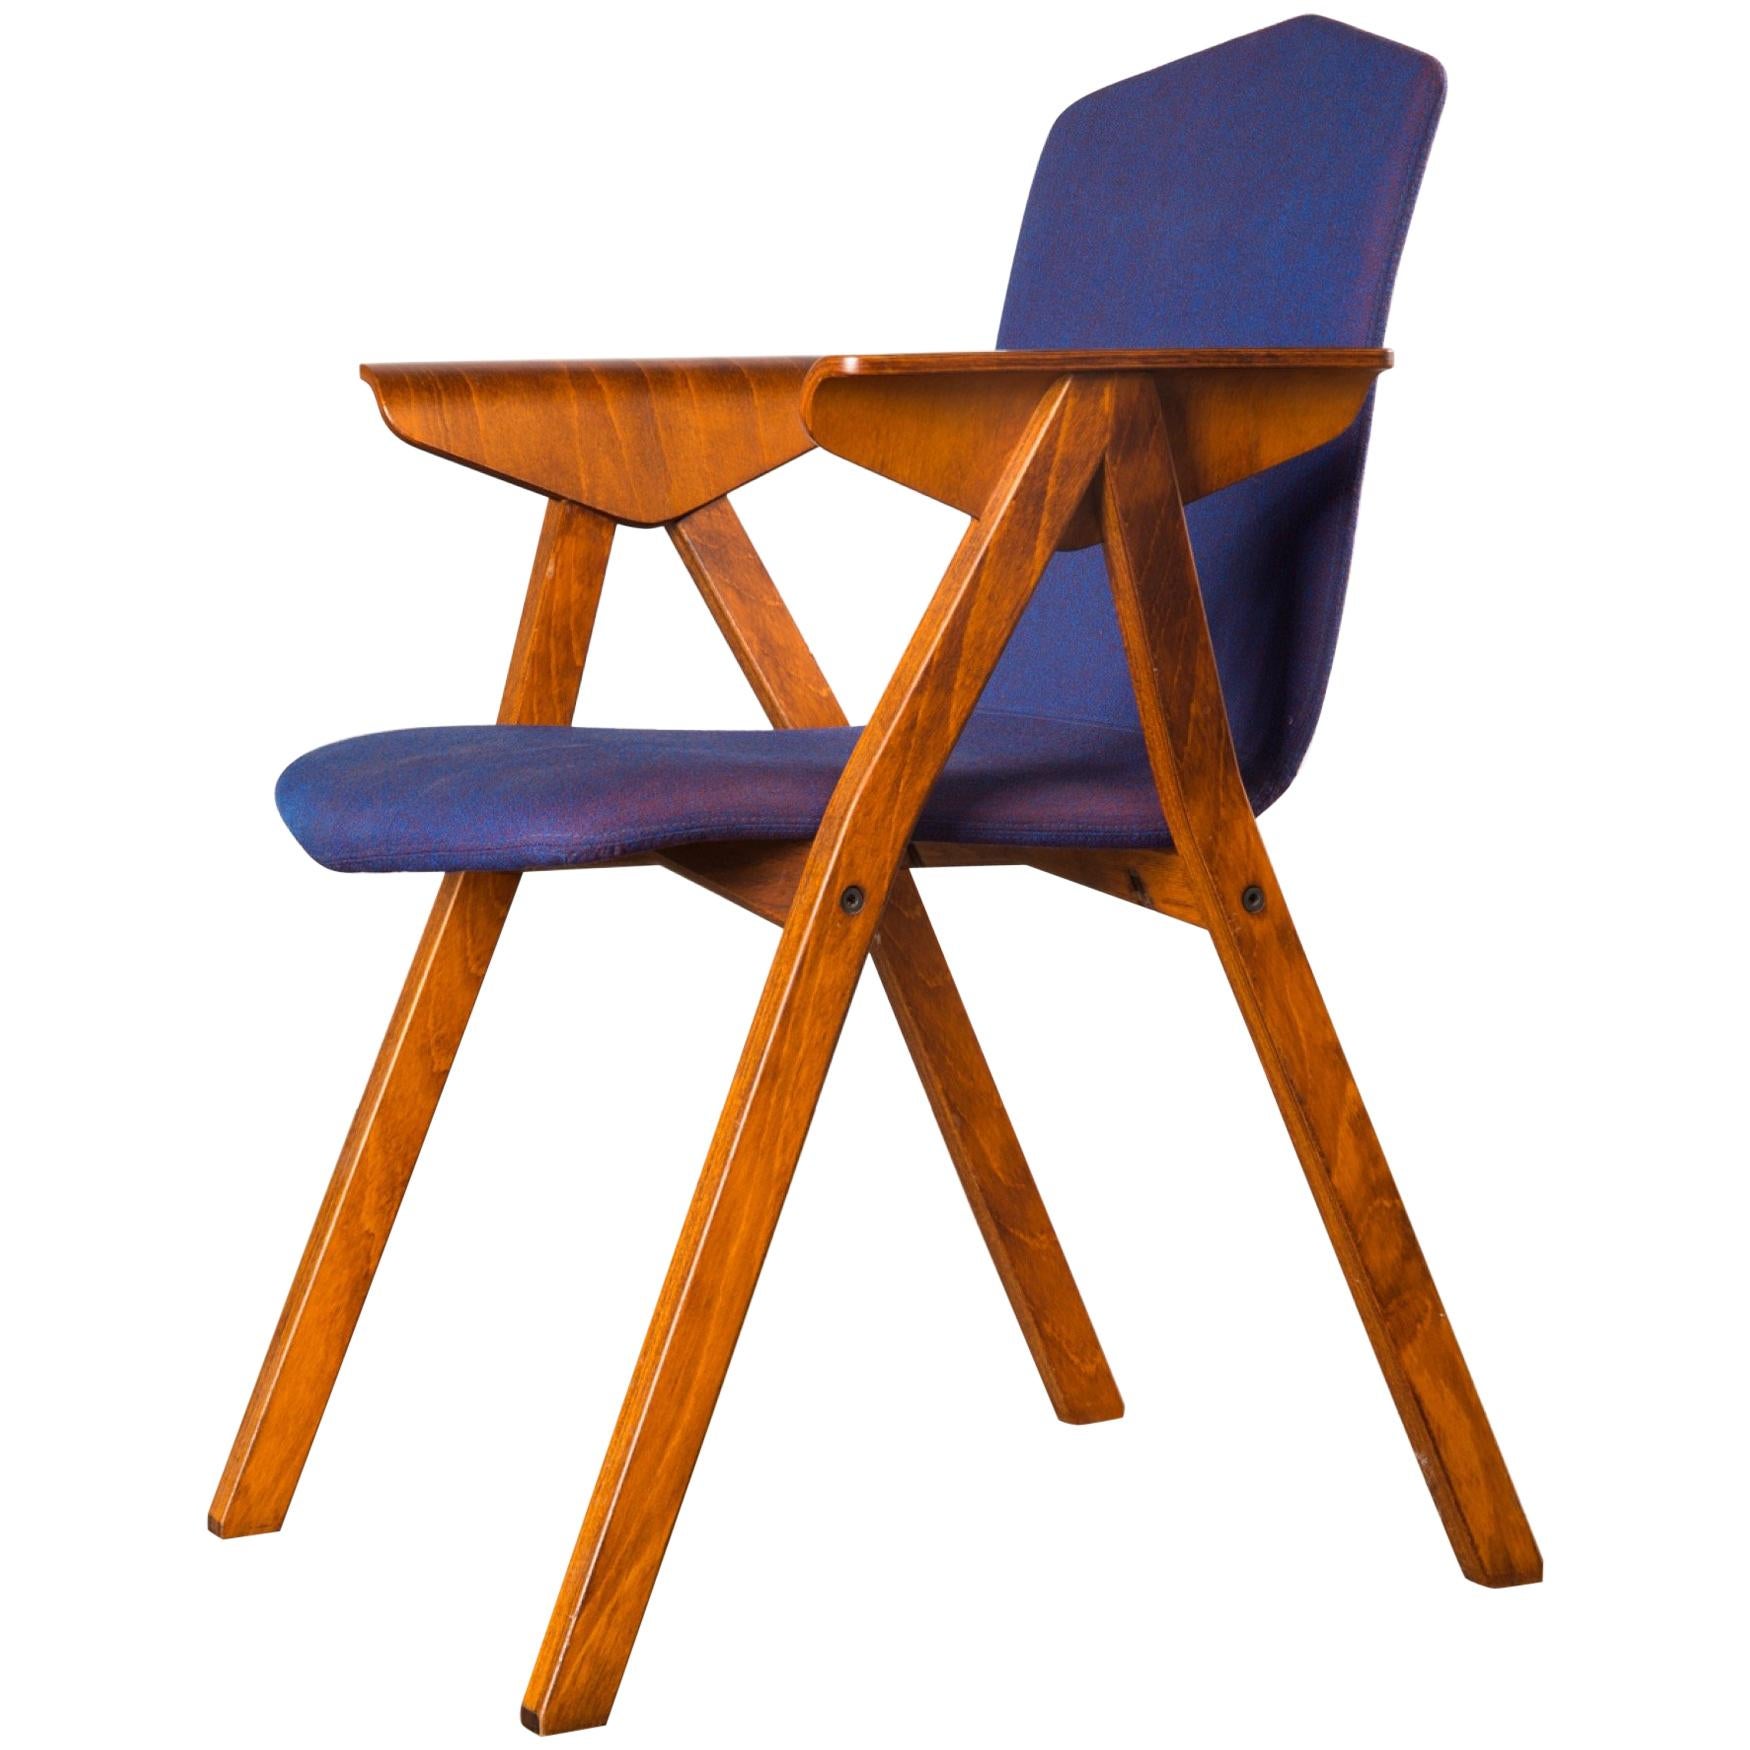 Midcentury Rosewood Armchair by Norwegian Manufacturer Hag